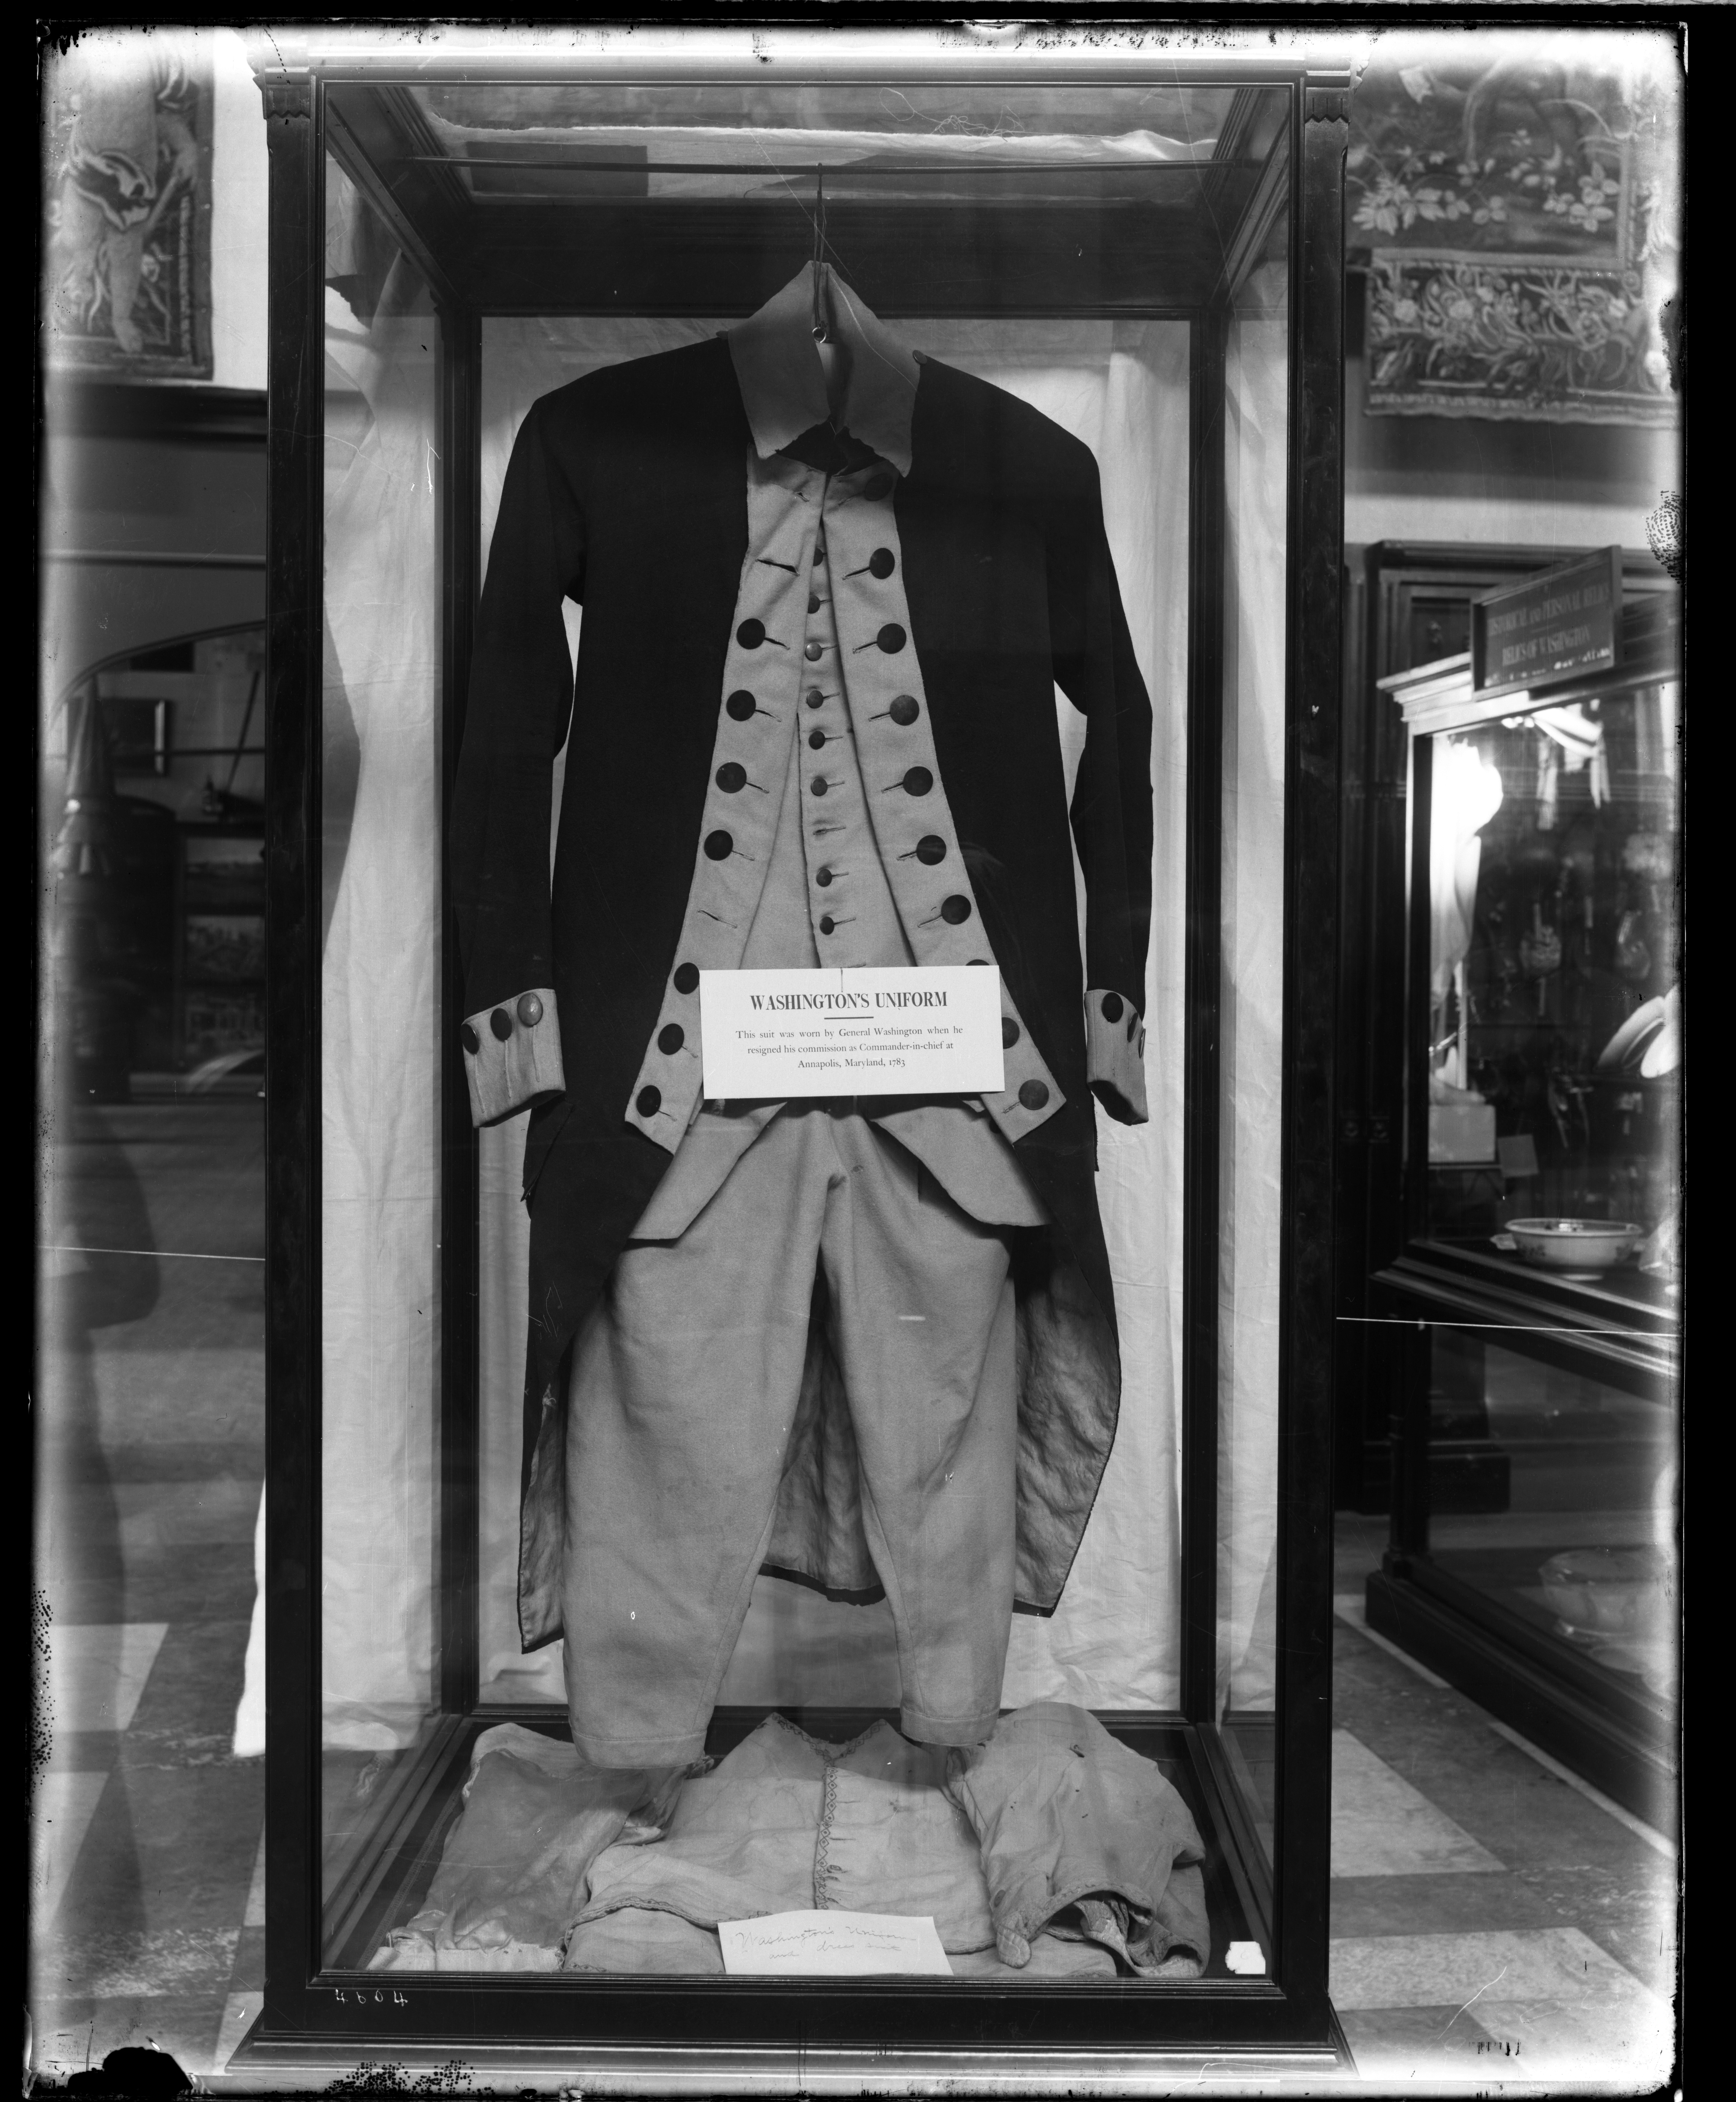 George Washington's military uniform in an exhibit case. 